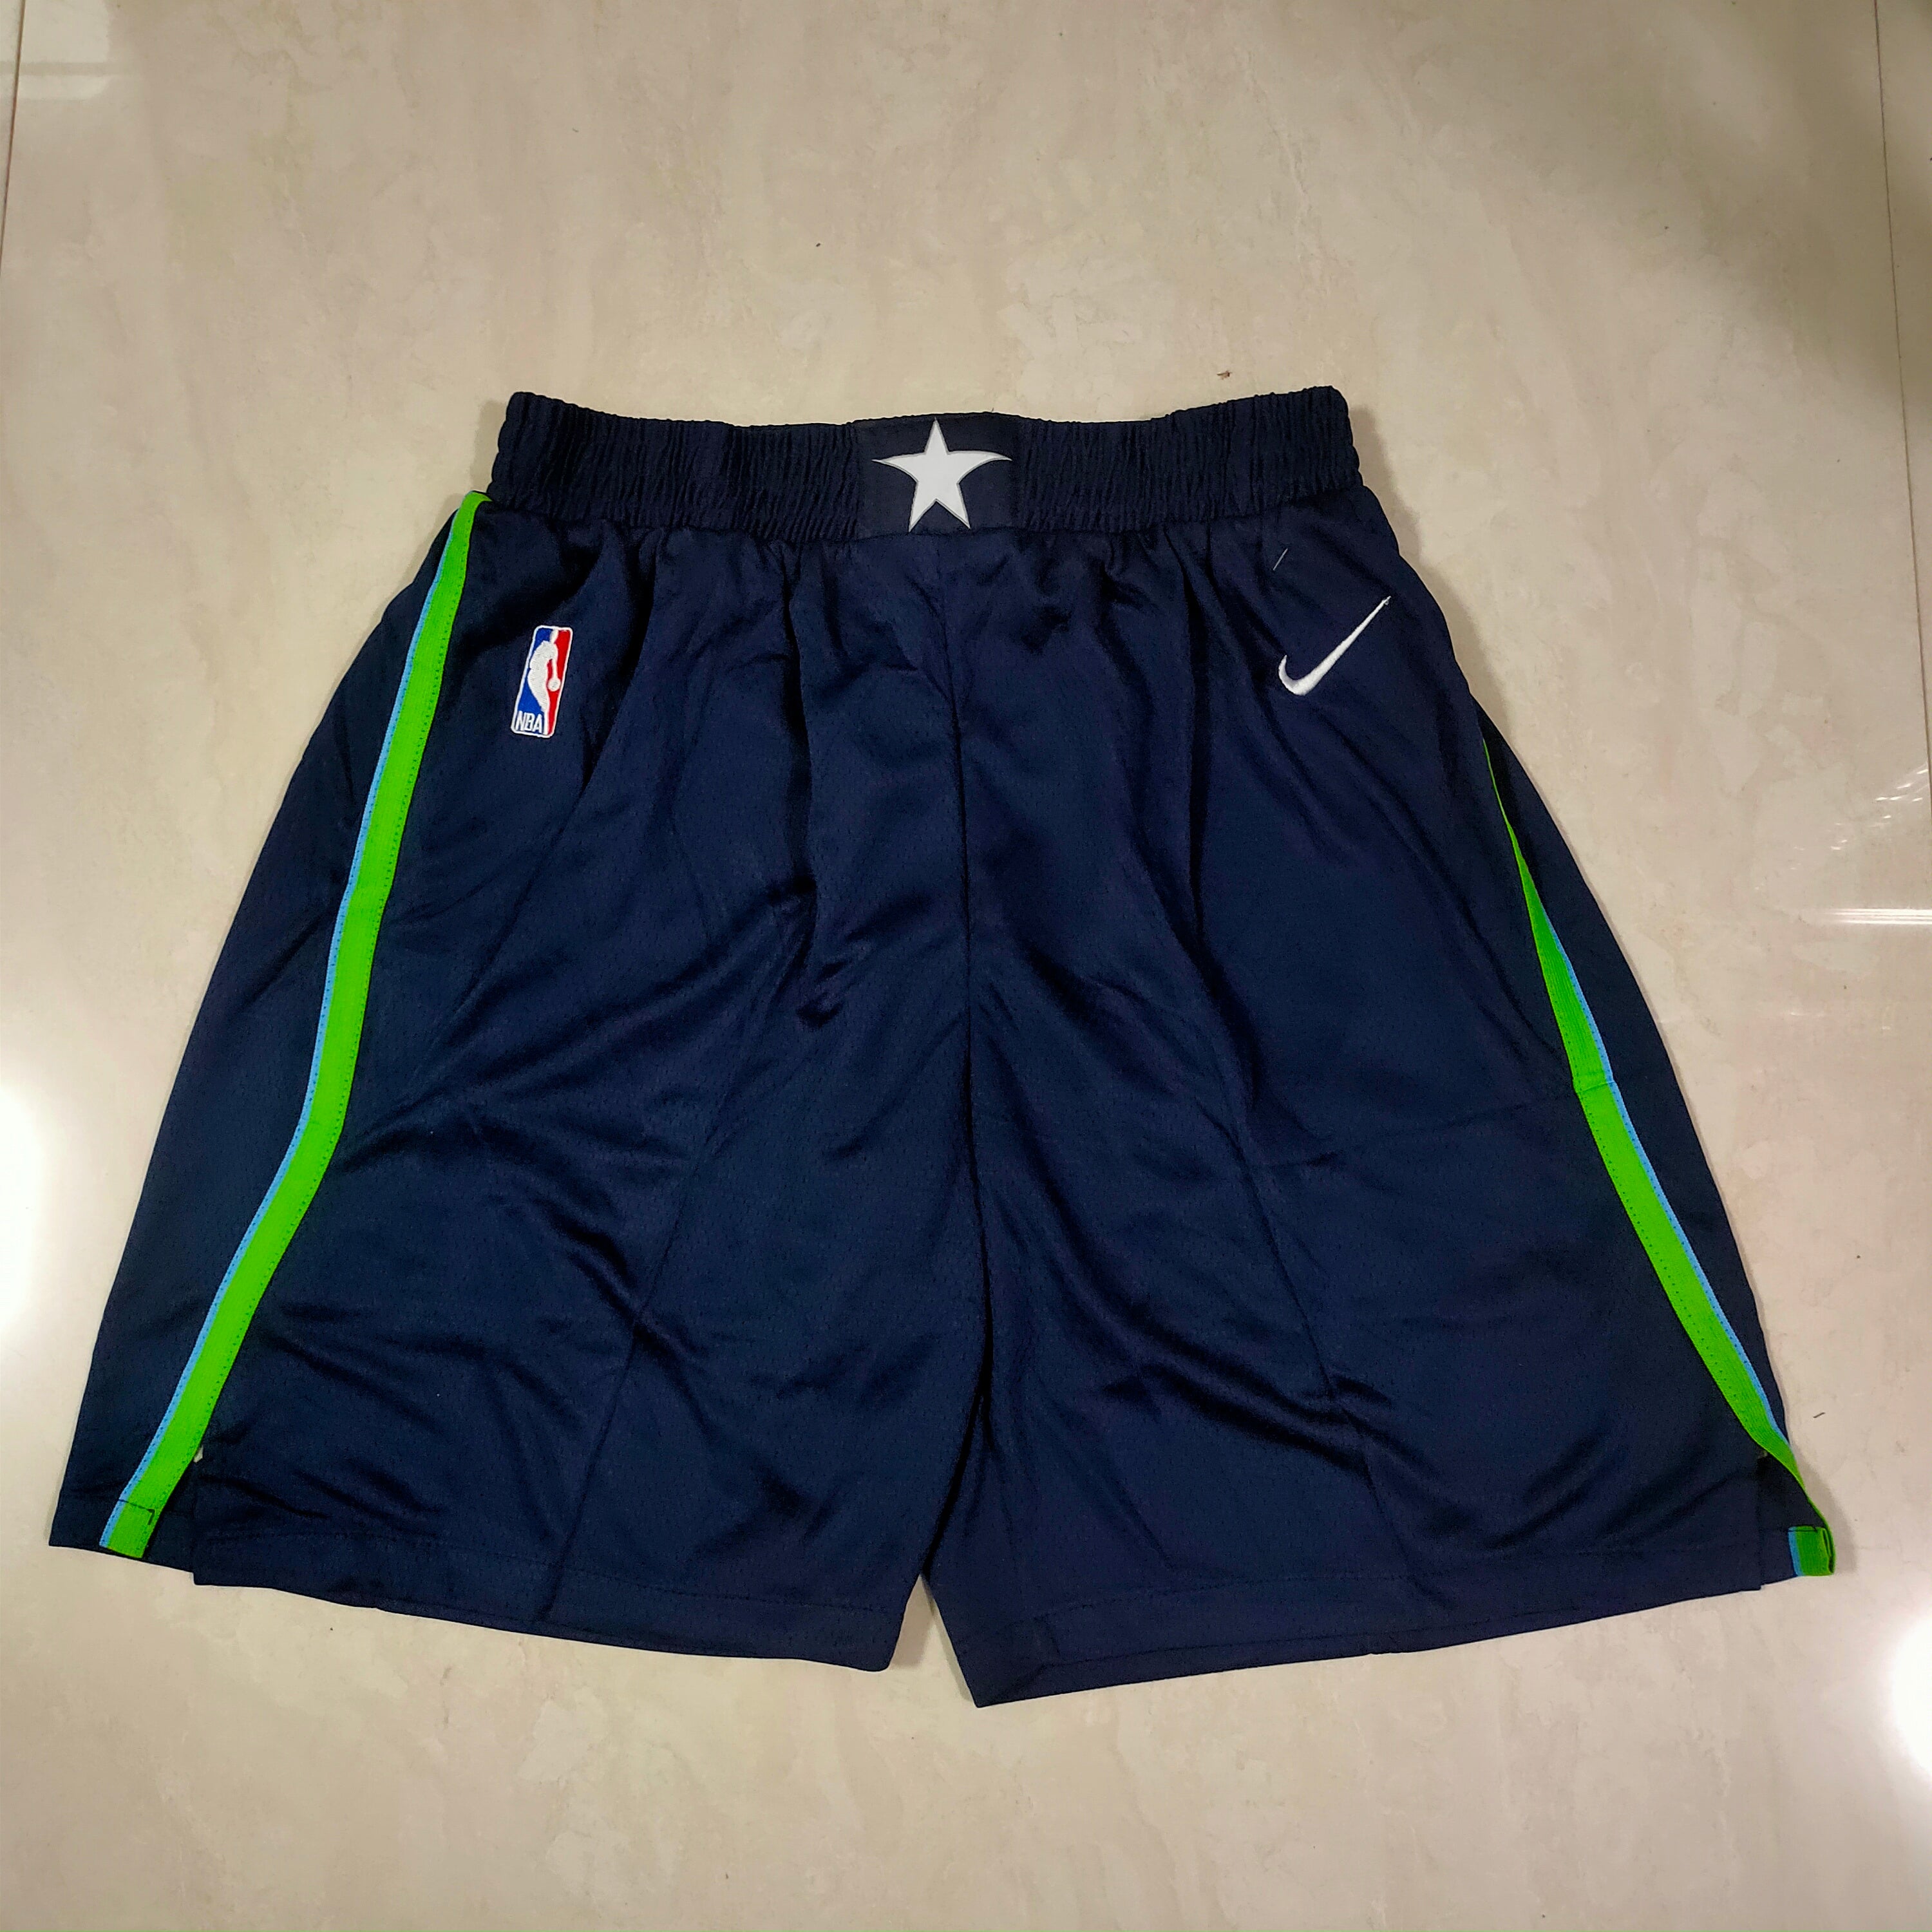 Dallas navy blue /neon green shorts